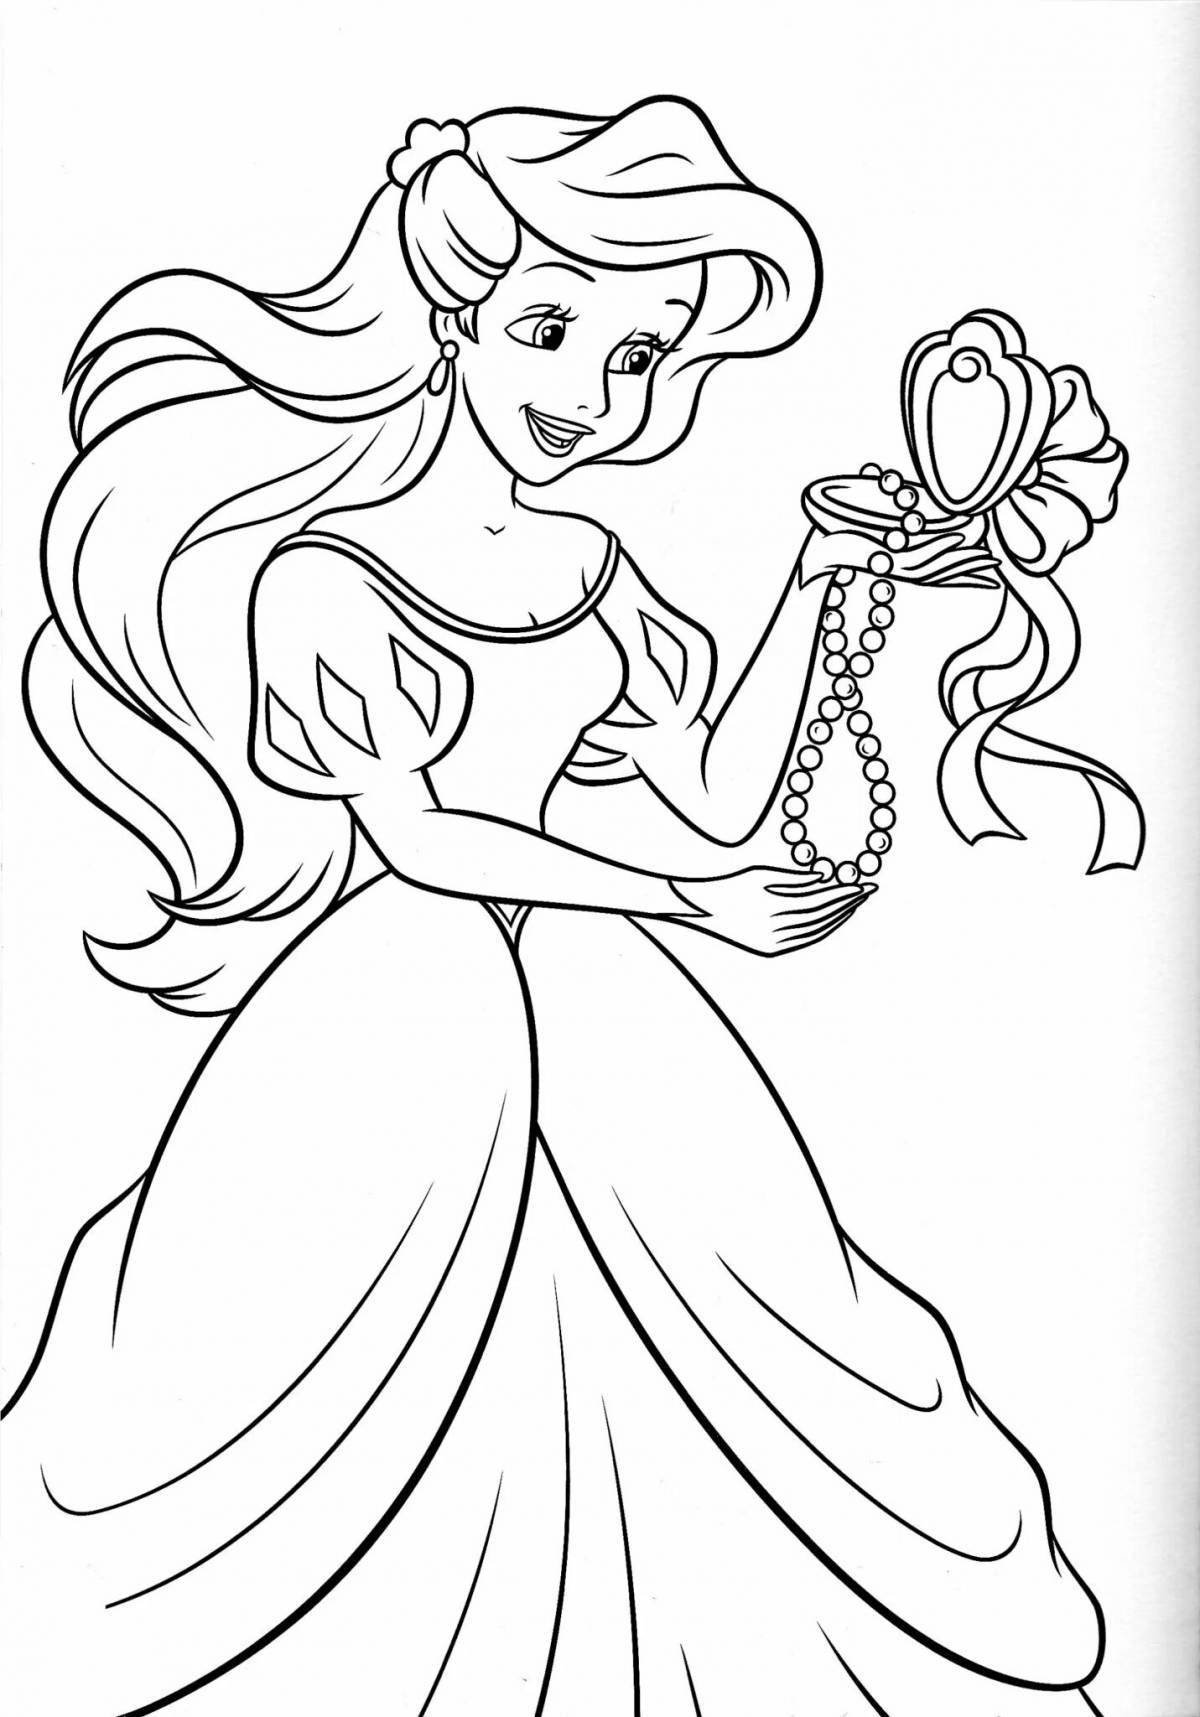 Disney princess wild coloring